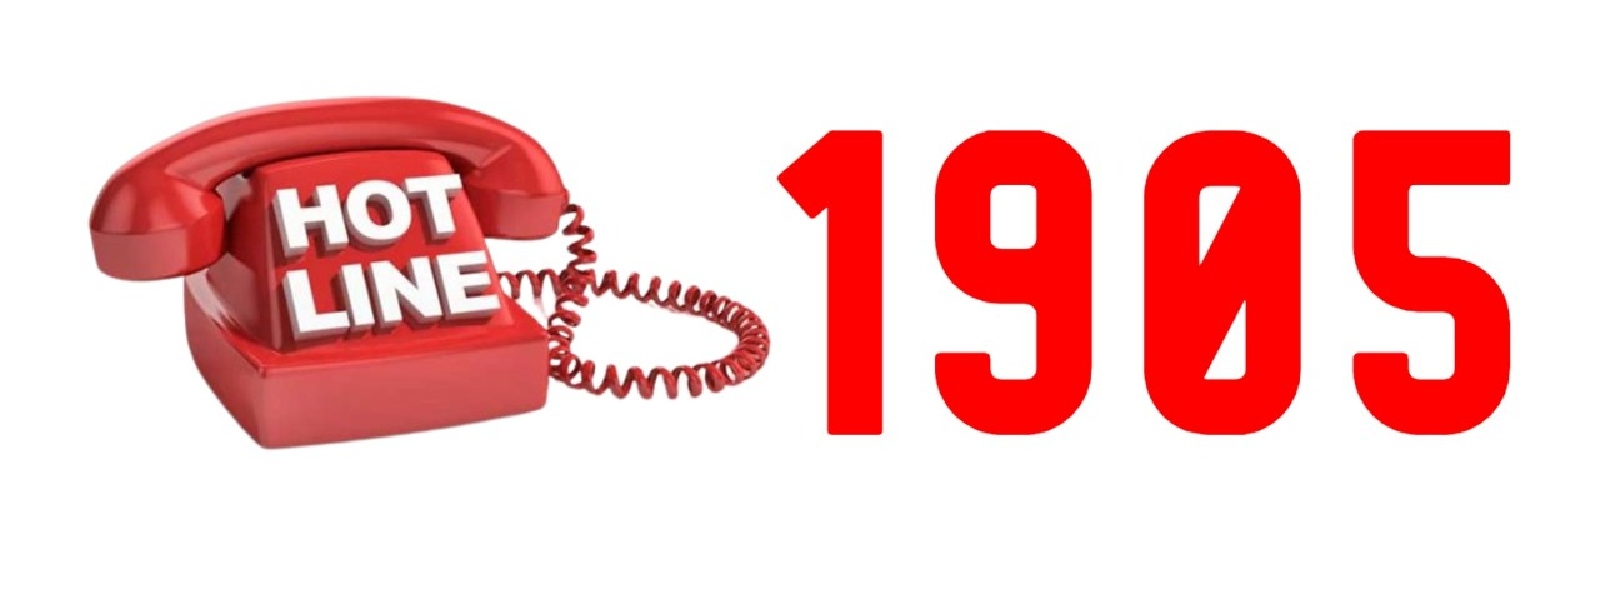 1905 - Hotline to report corruption